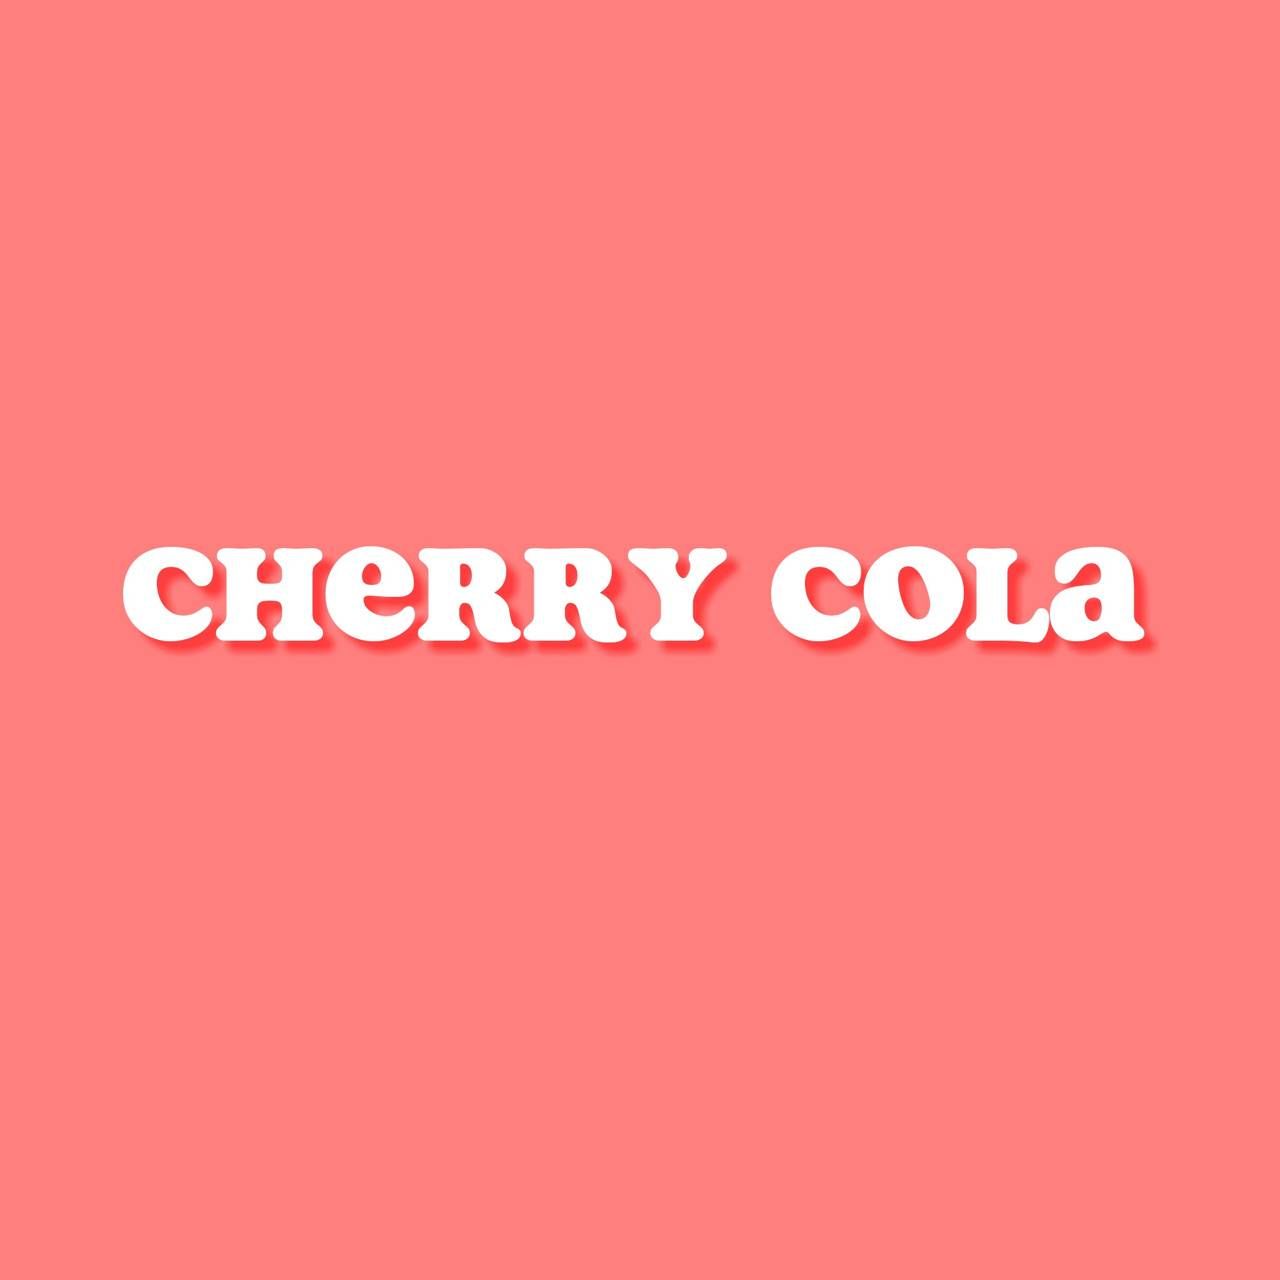 Cherry Cola Wallpaper